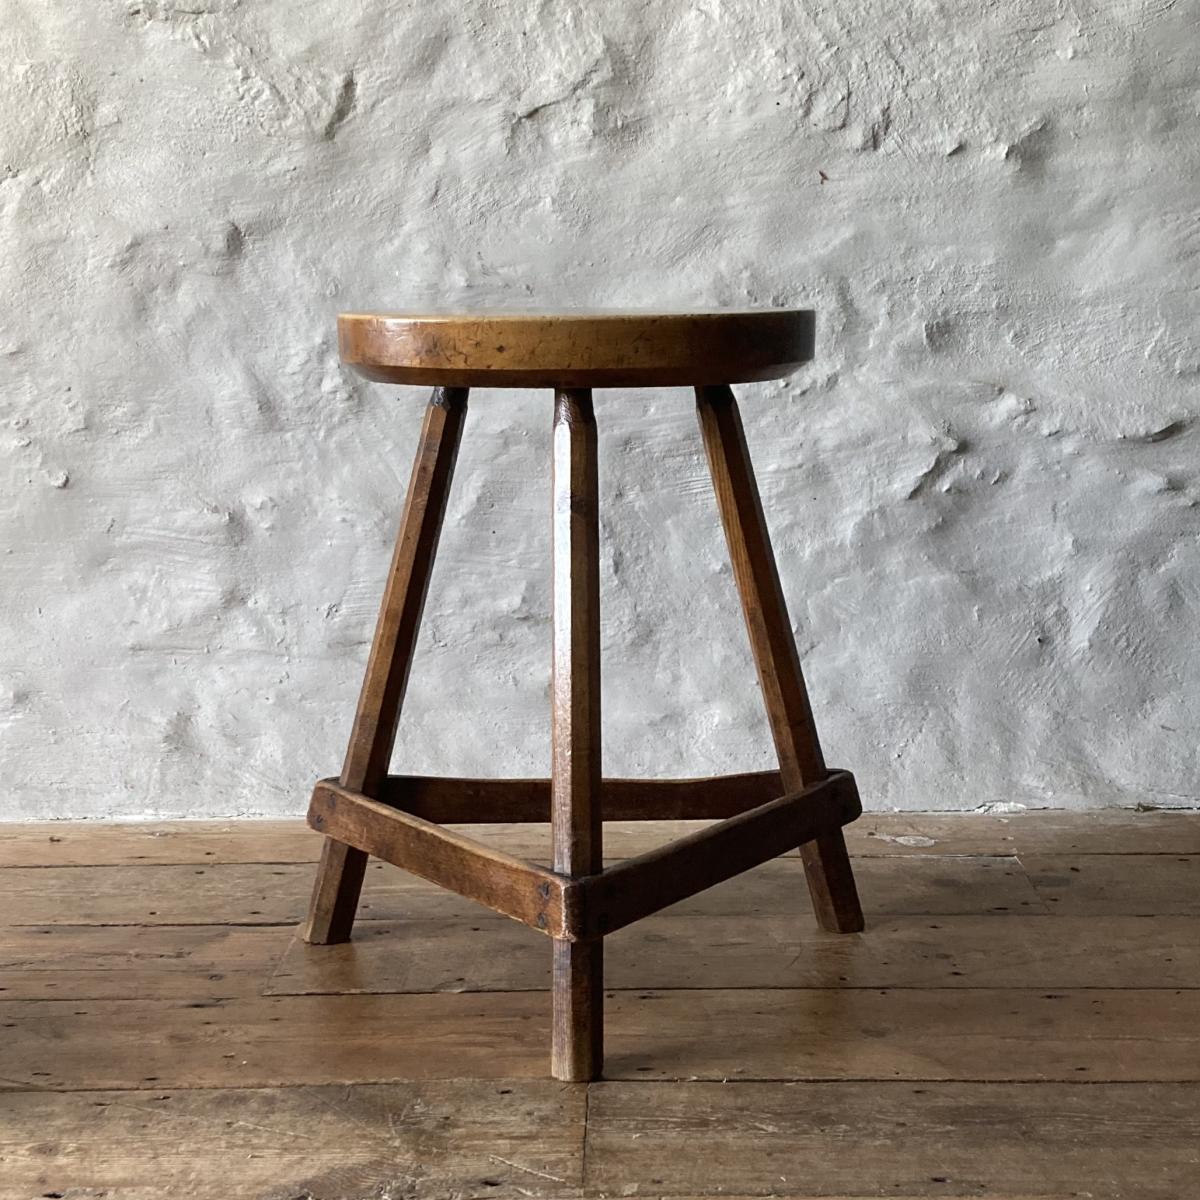 Primitive stool/table